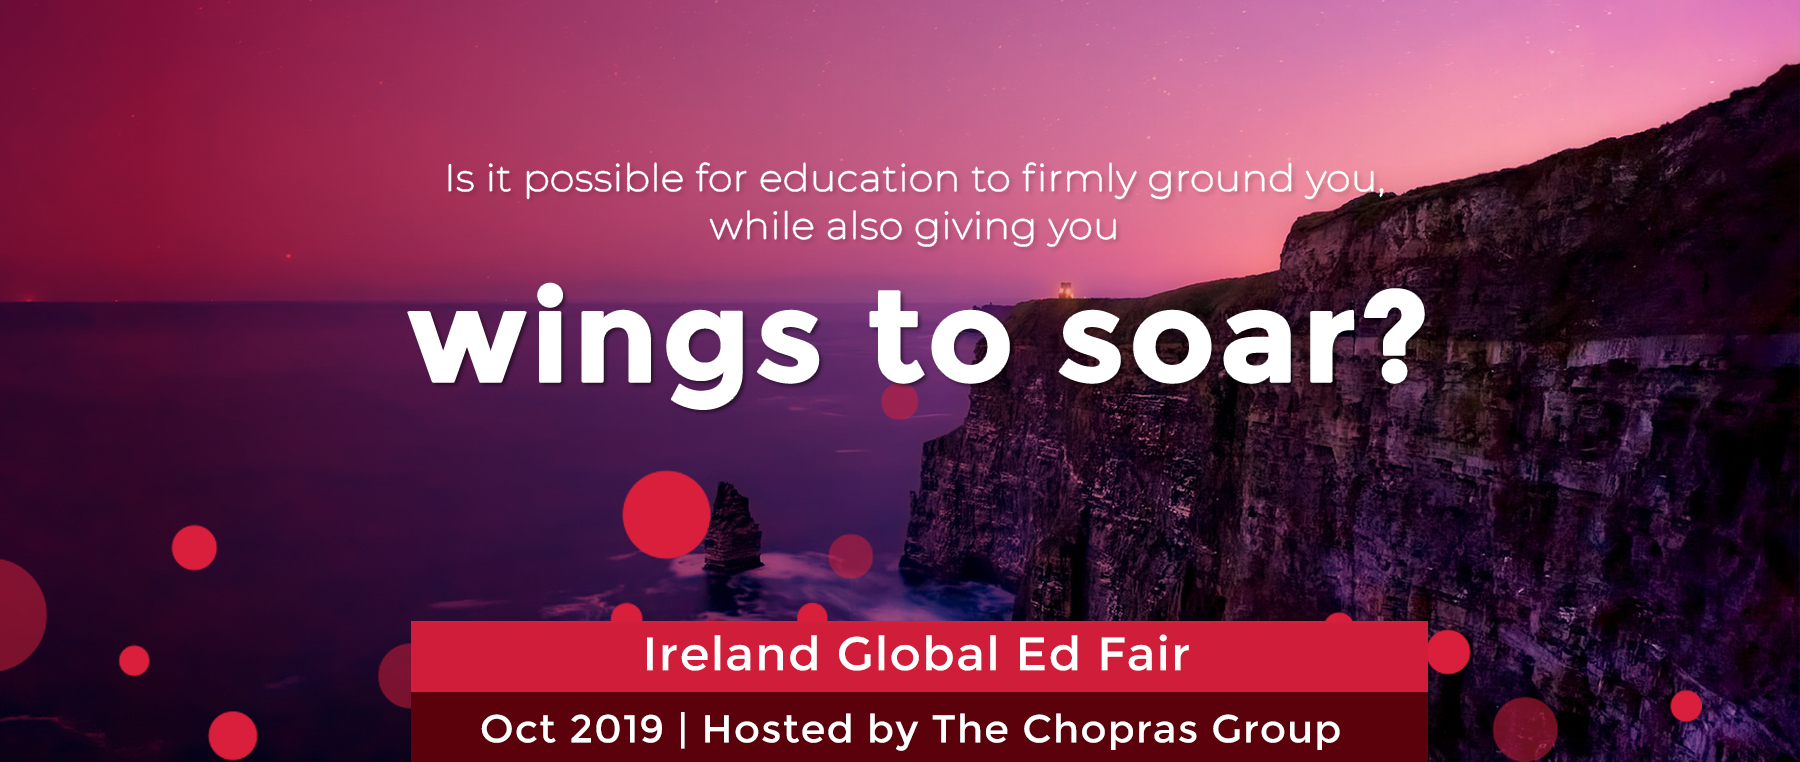 Ireland Global Ed Fair Hosted by The Chopras Group